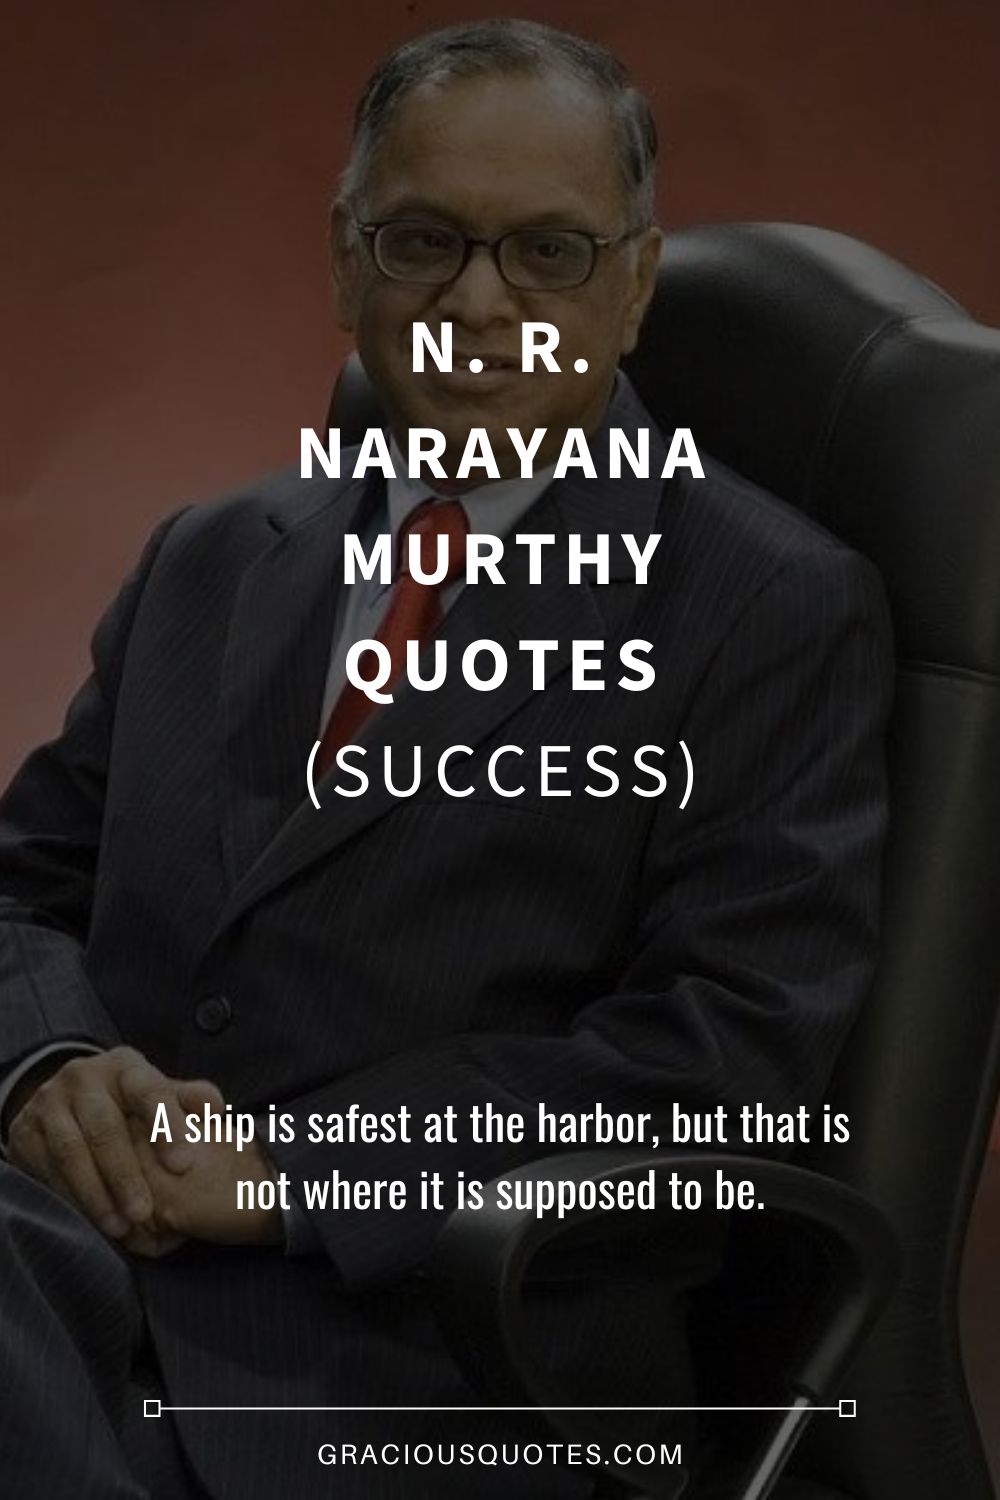 N. R. NarayanA Murthy Quotes (SUCCESS) - Gracious Quotes